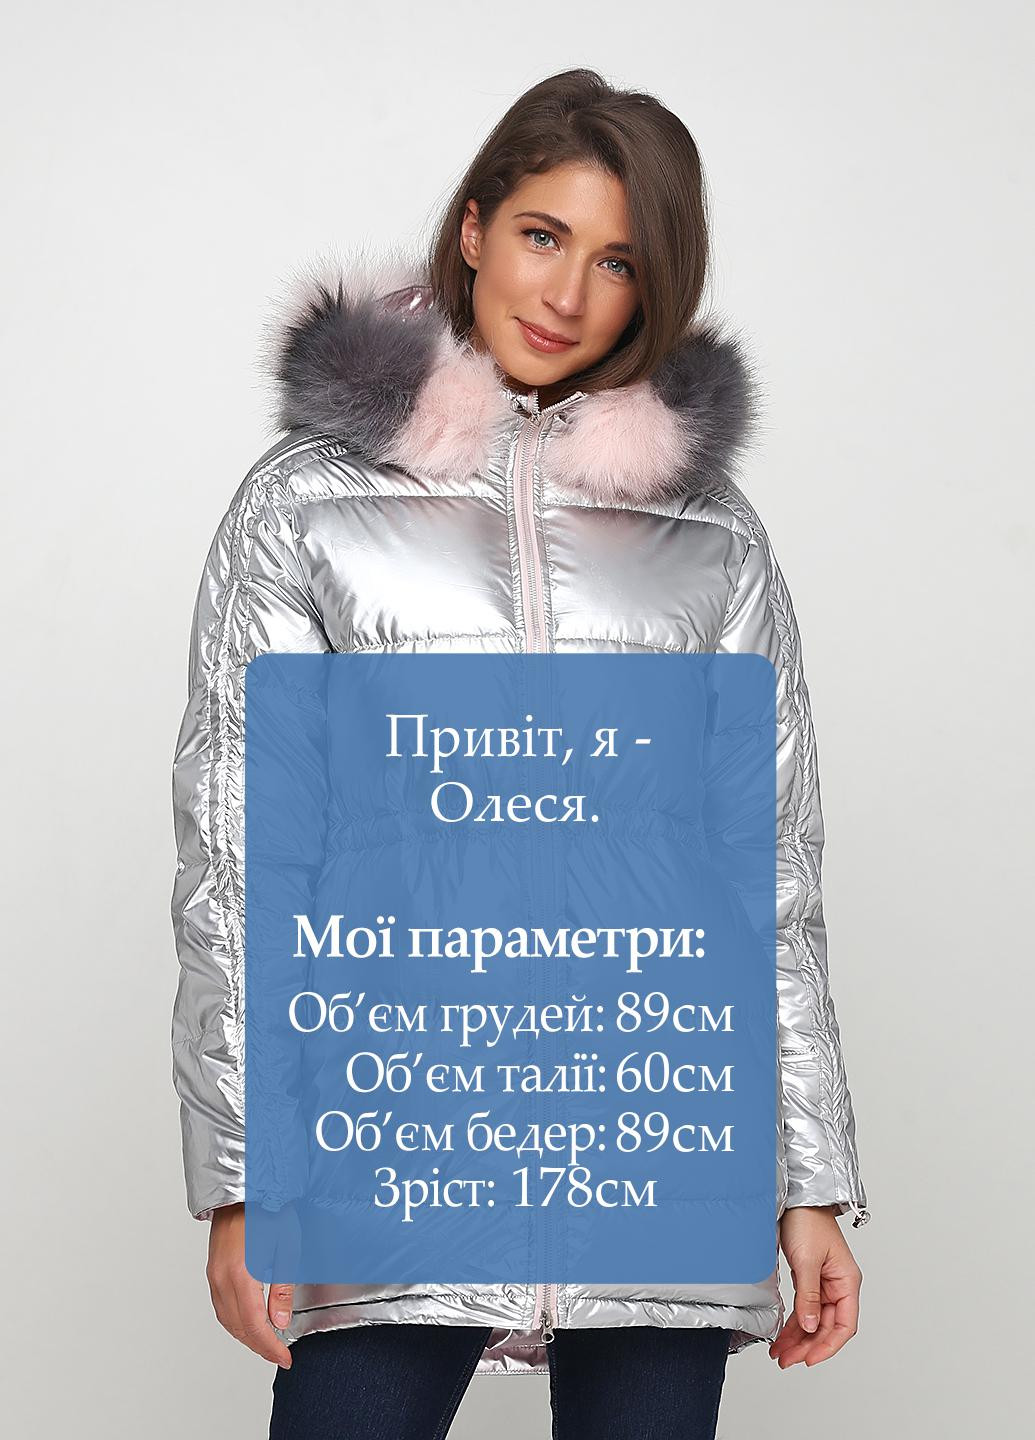 Серебряная зимняя куртка Mengerzi